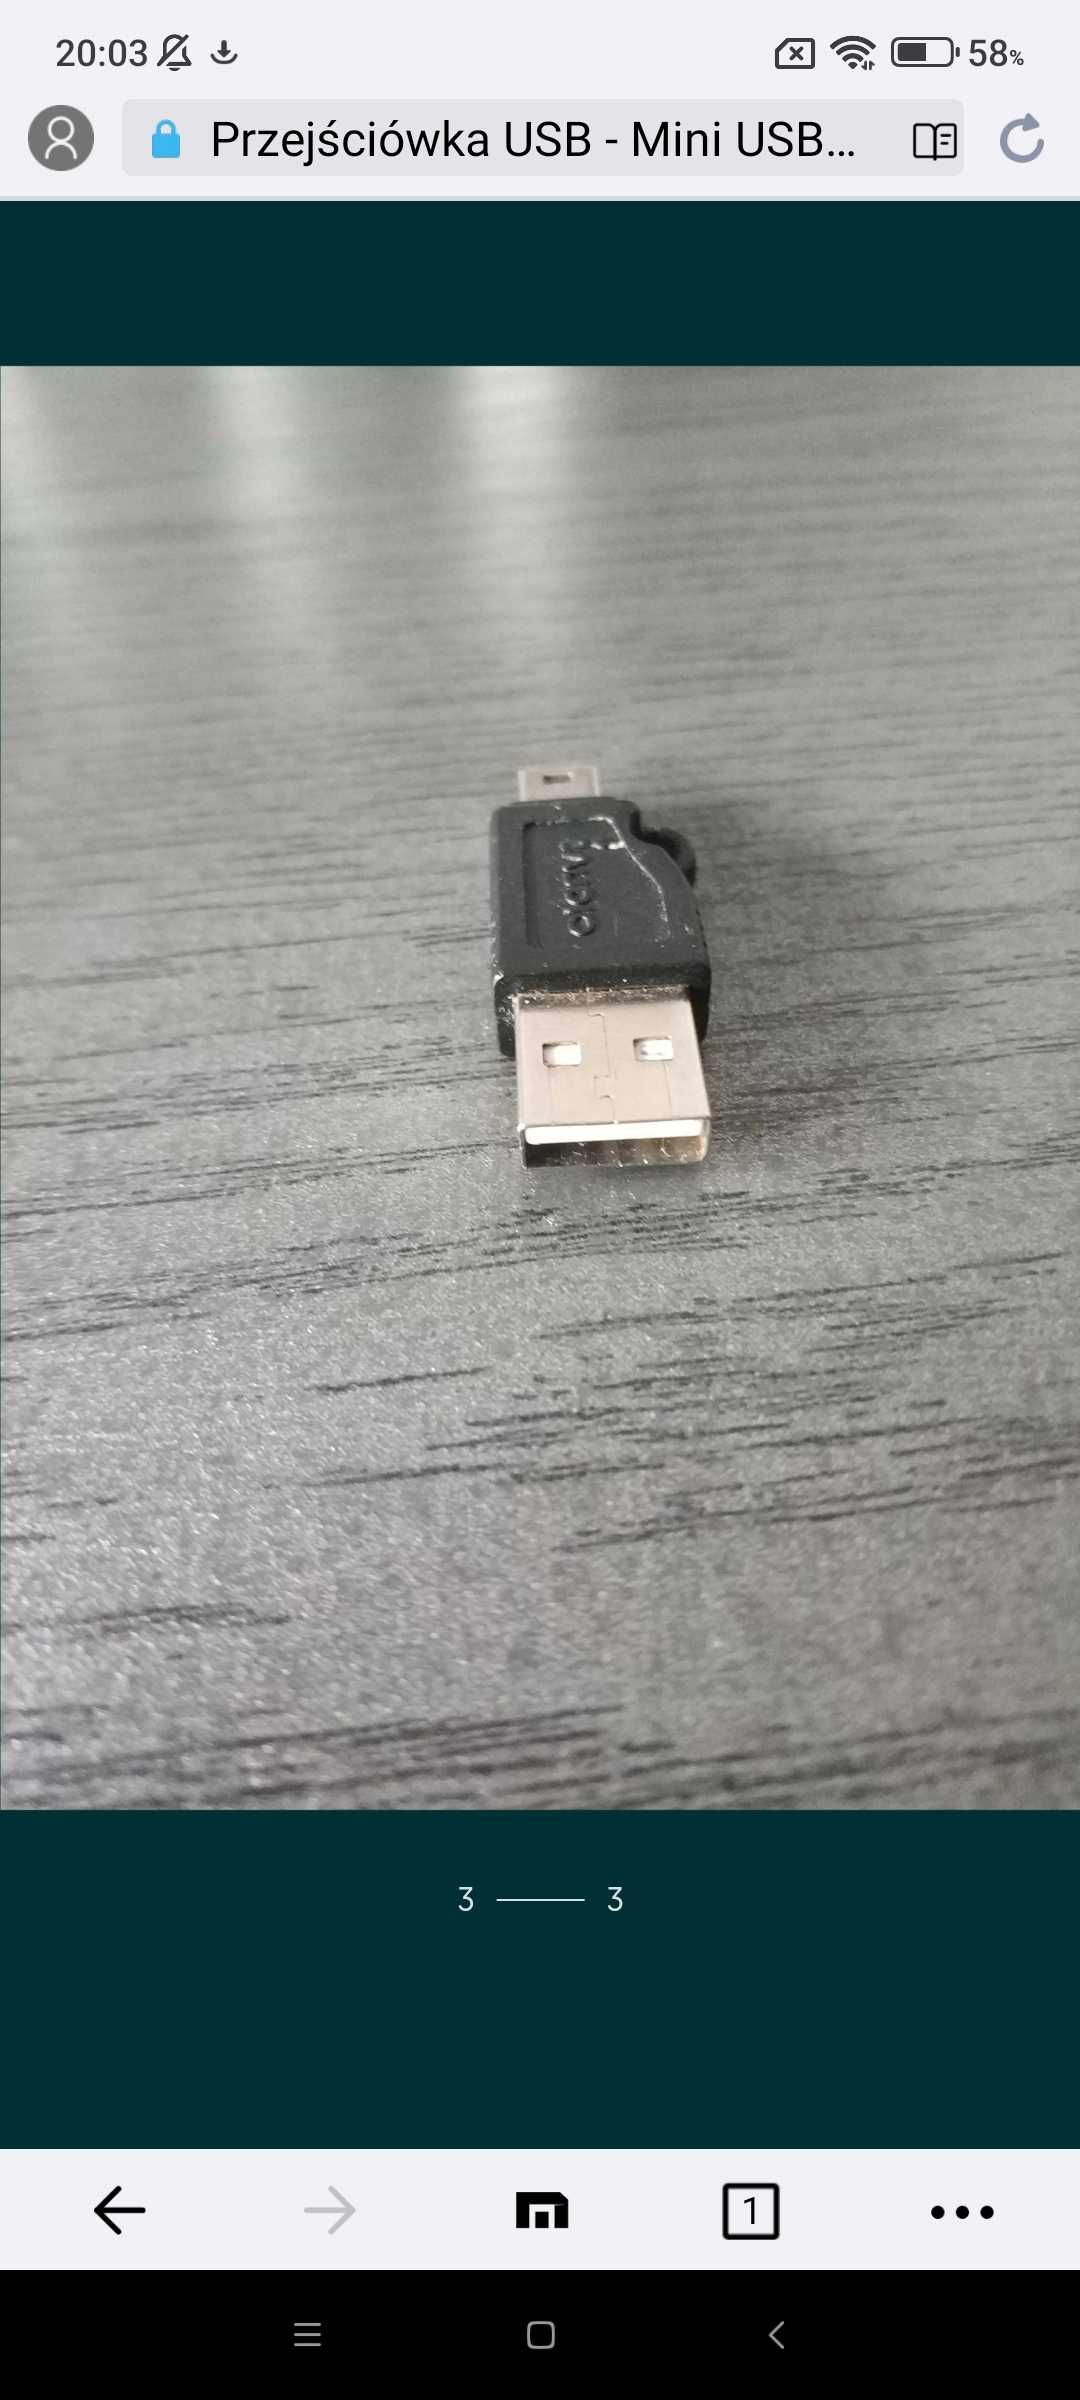 Przejściówka USB - Mini USB adapter